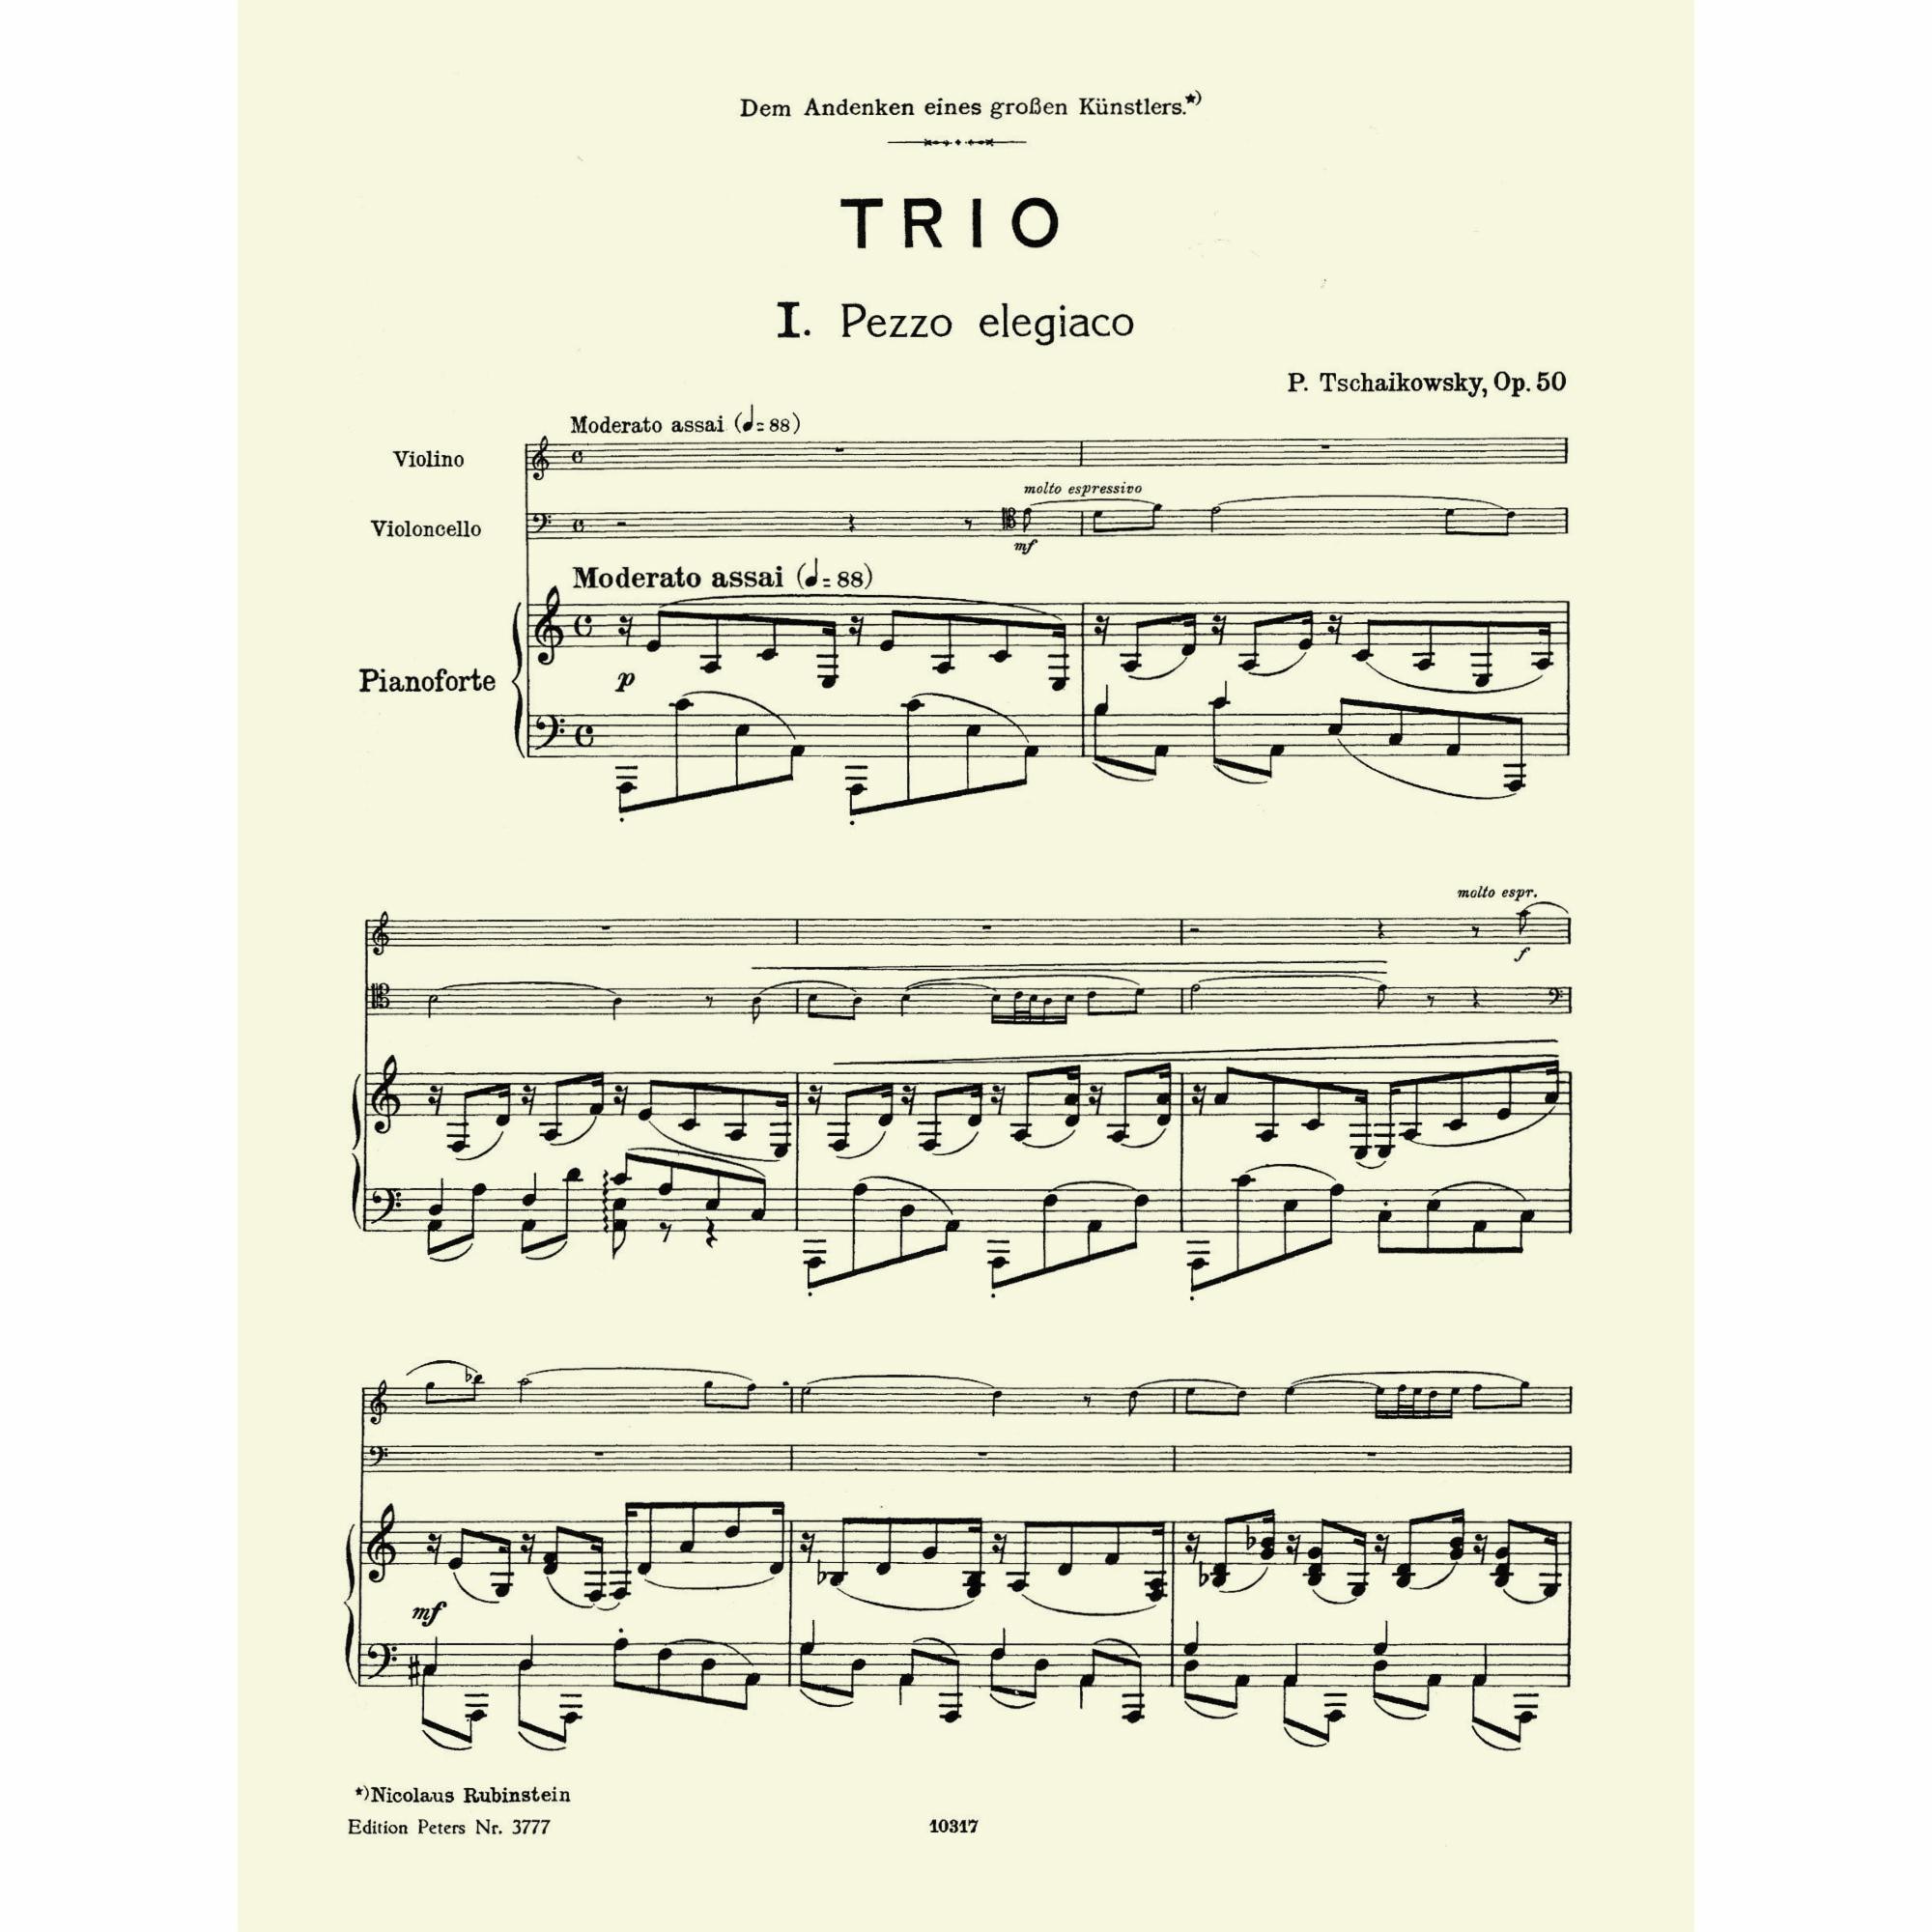 Sample: Piano (Pg. 3)